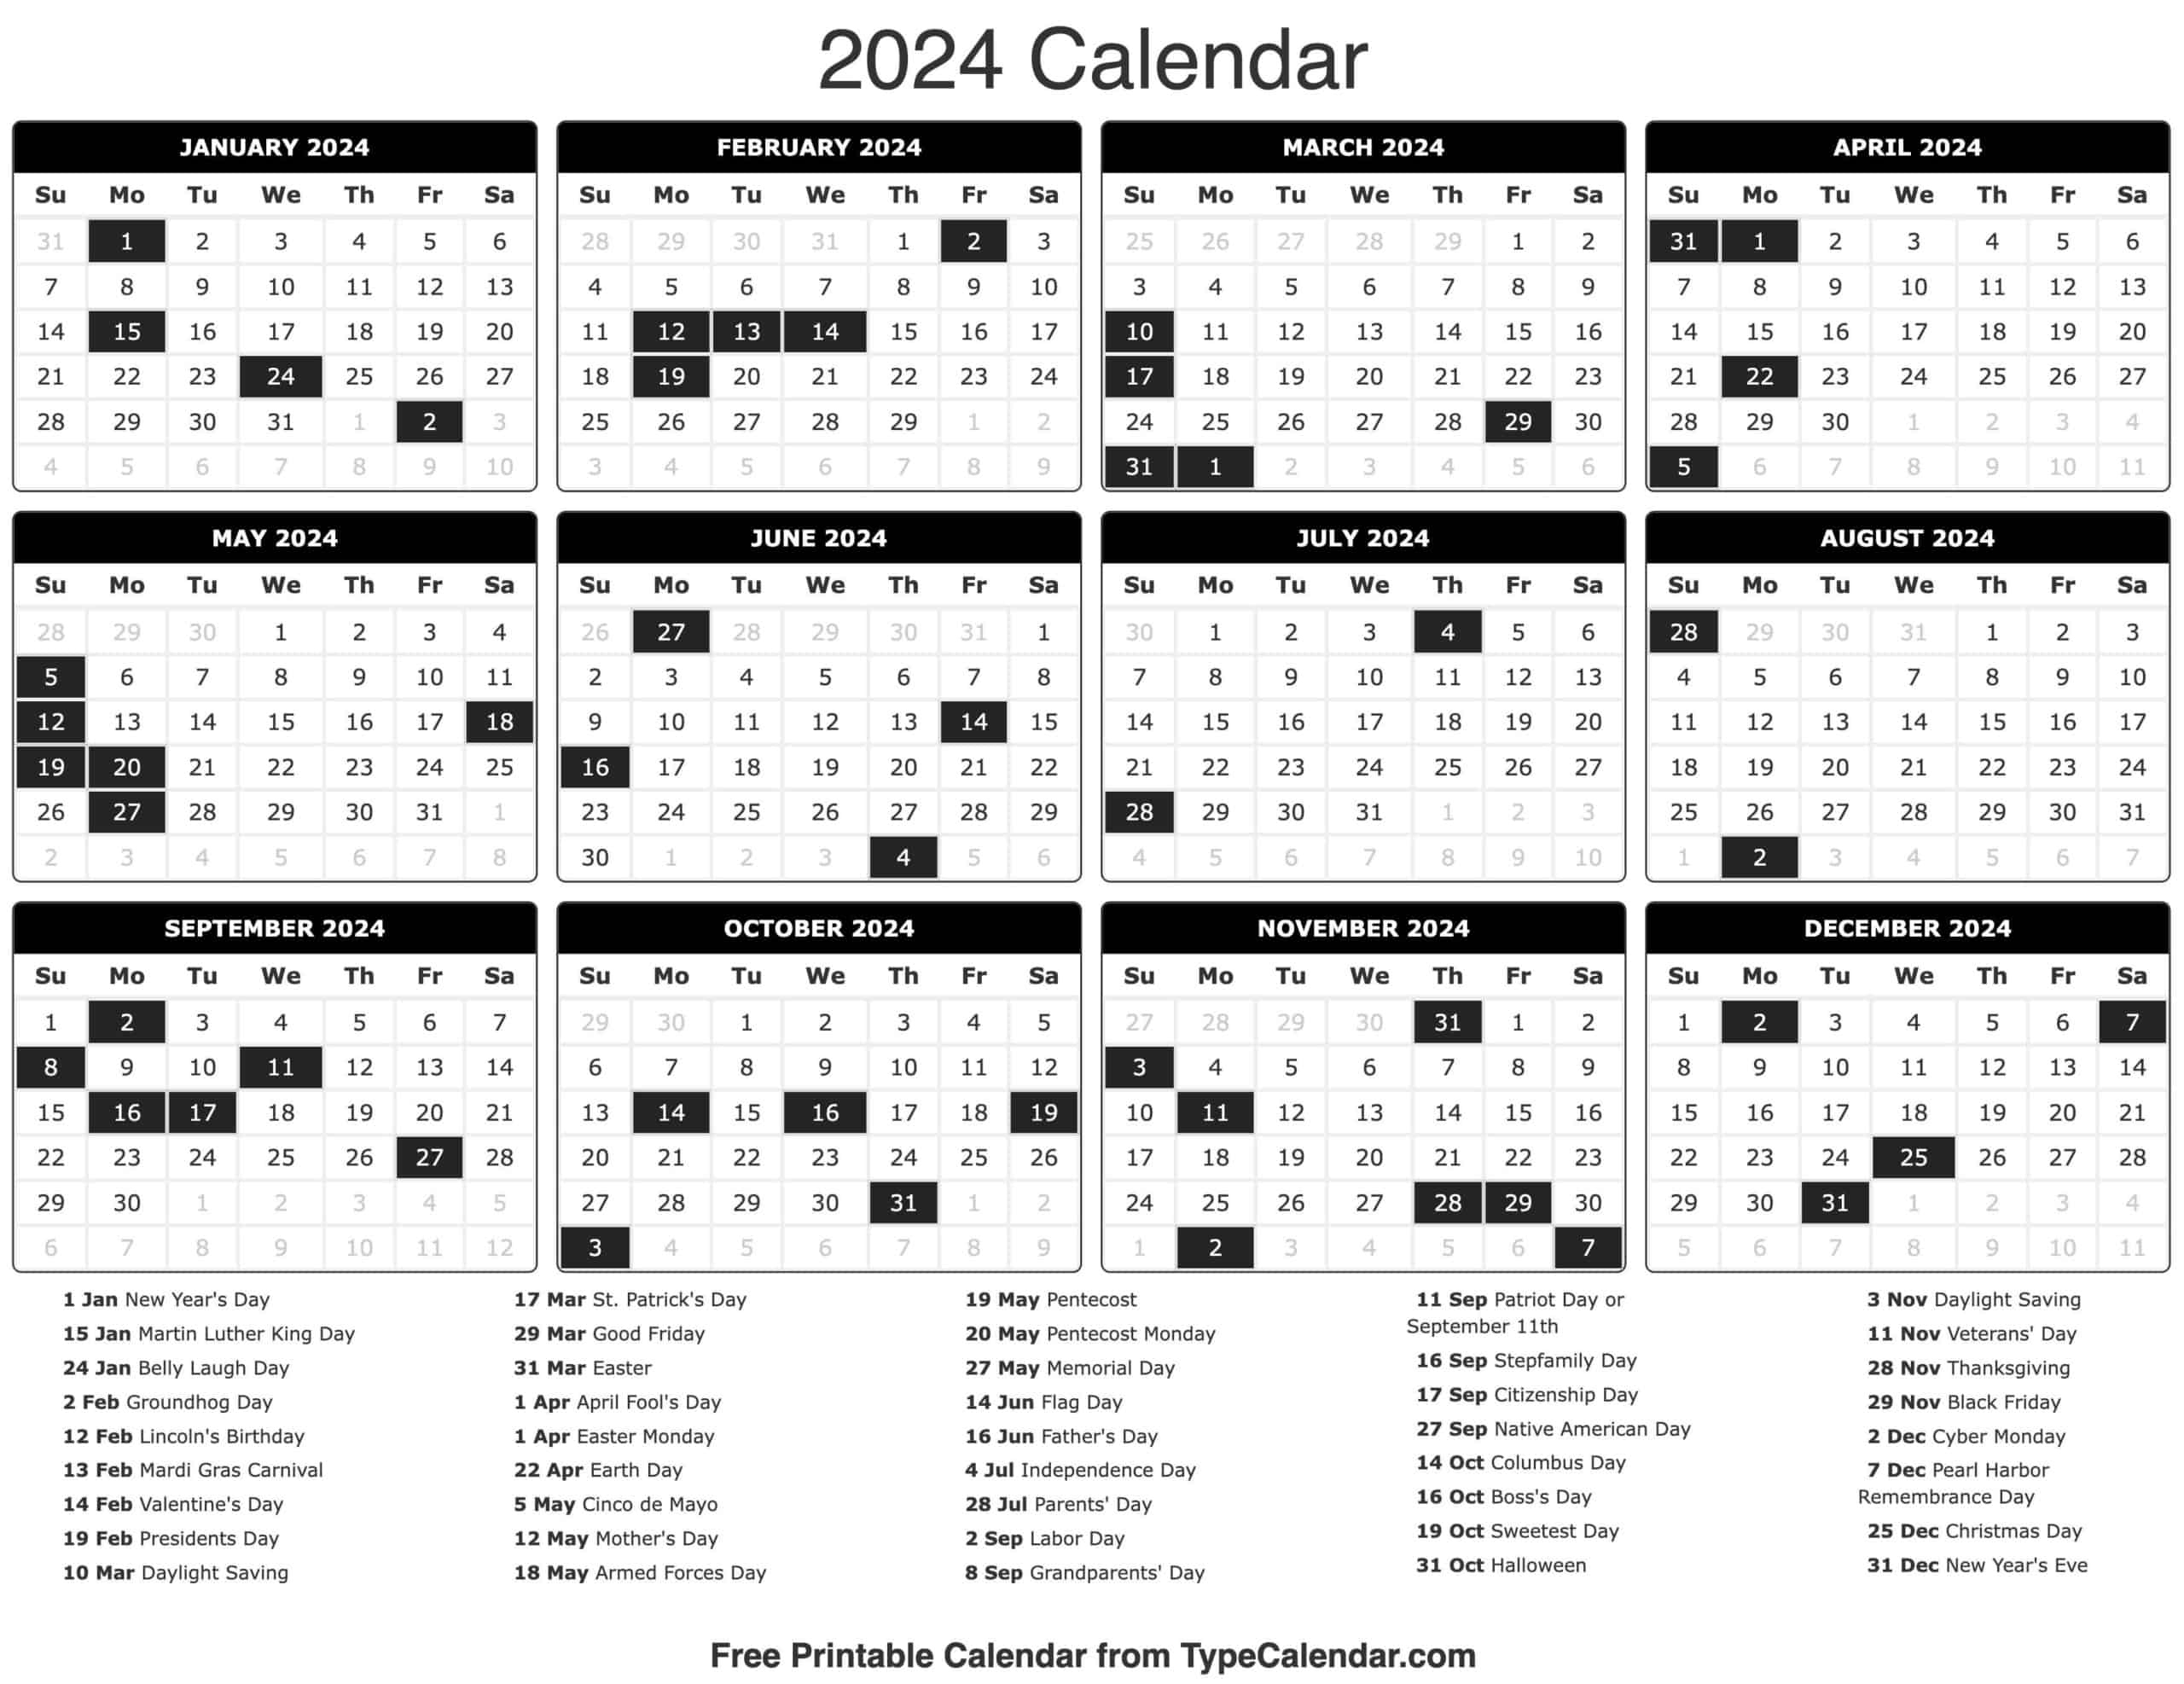 2024 Calendar: Free Printable Calendar With Holidays | Time And Date Printable Calendar 2024